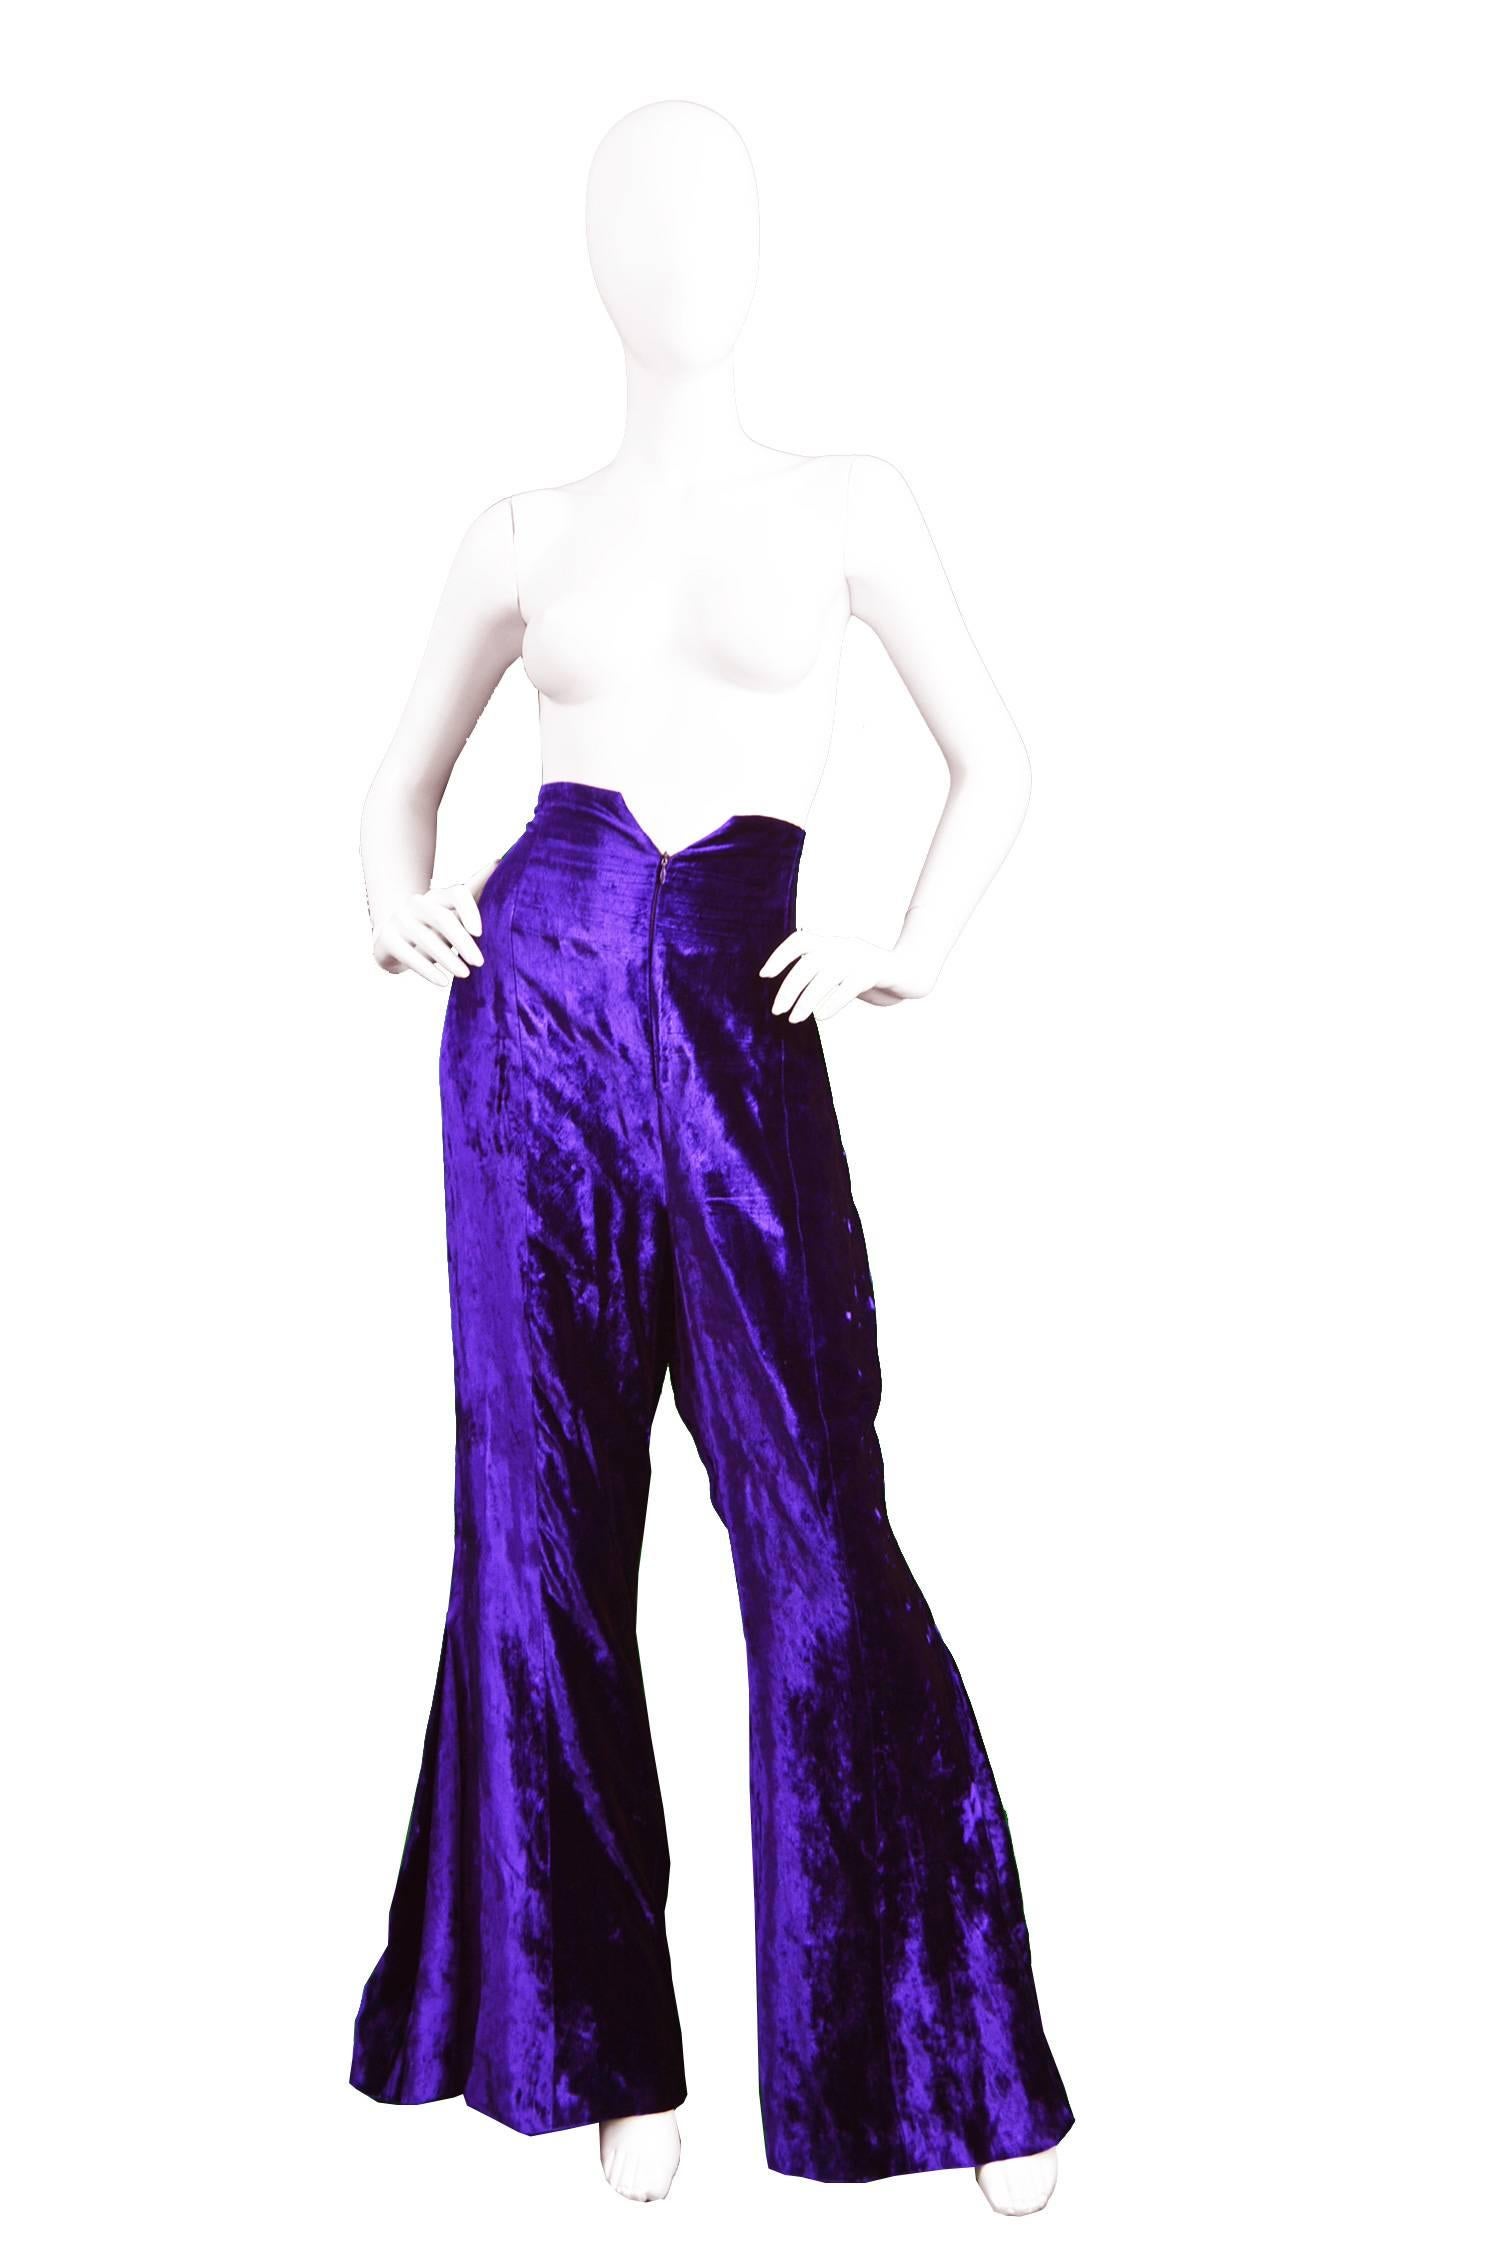 Norma Kamali OMO Purple Velvet Ultra High Waist Bell Bottom Flares, 1980s

Estimated Size: UK 12-14/ US 8-10/ EU 40-42. Please check measurements.
High Waist - 30” / 76cm
Hips - up to 40” / 101cm
Rise - 17” / 43cm
Inside Leg - 34” / 86cm

Condition: